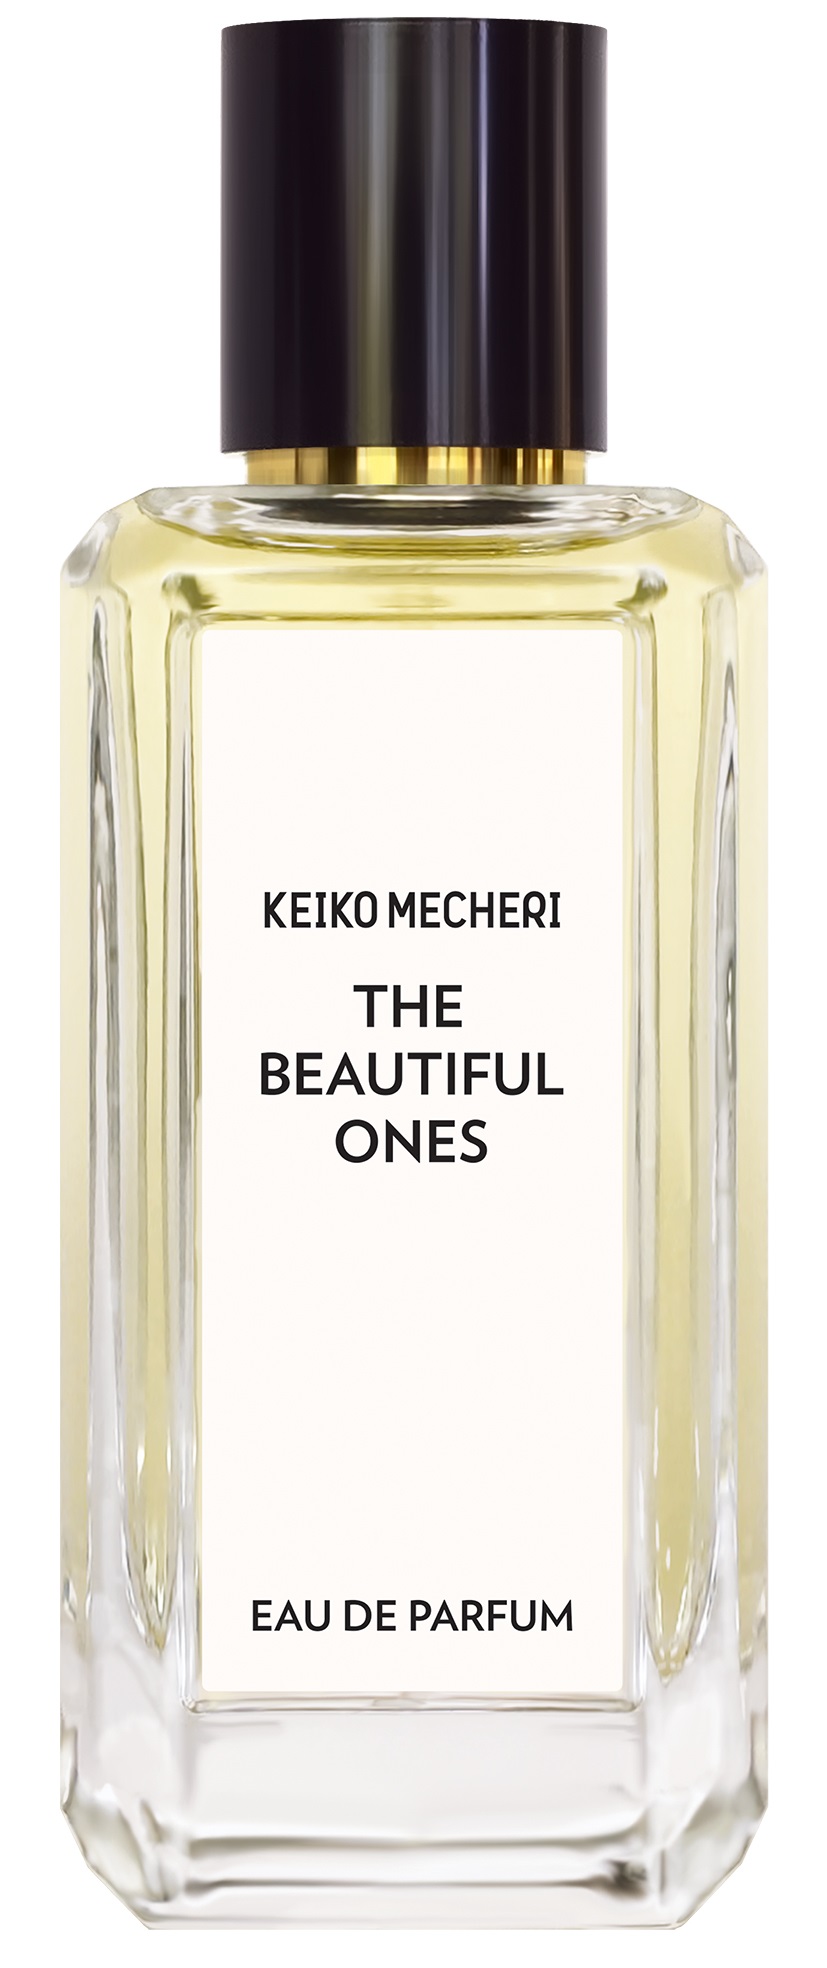 Keiko Mecheri The beautiful ones edp 100 ml.